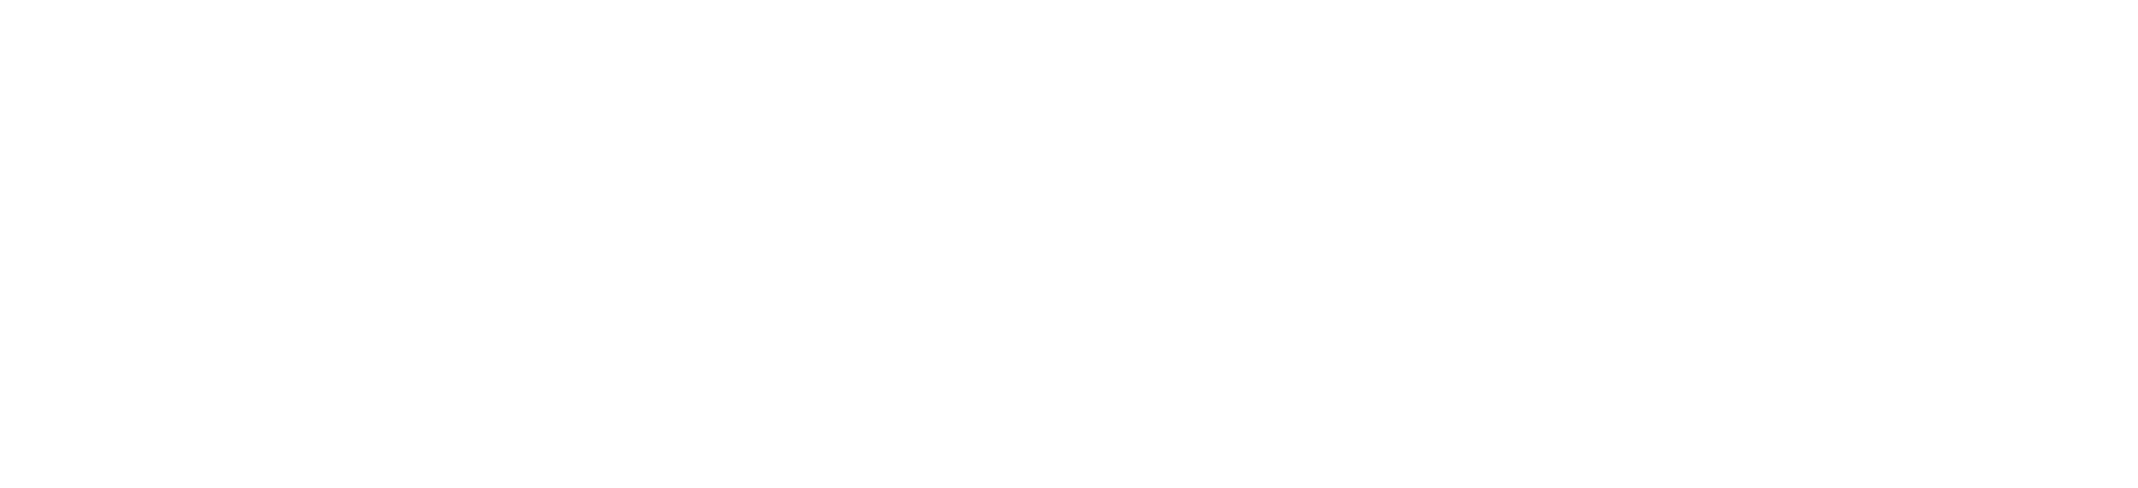 RBHA logo